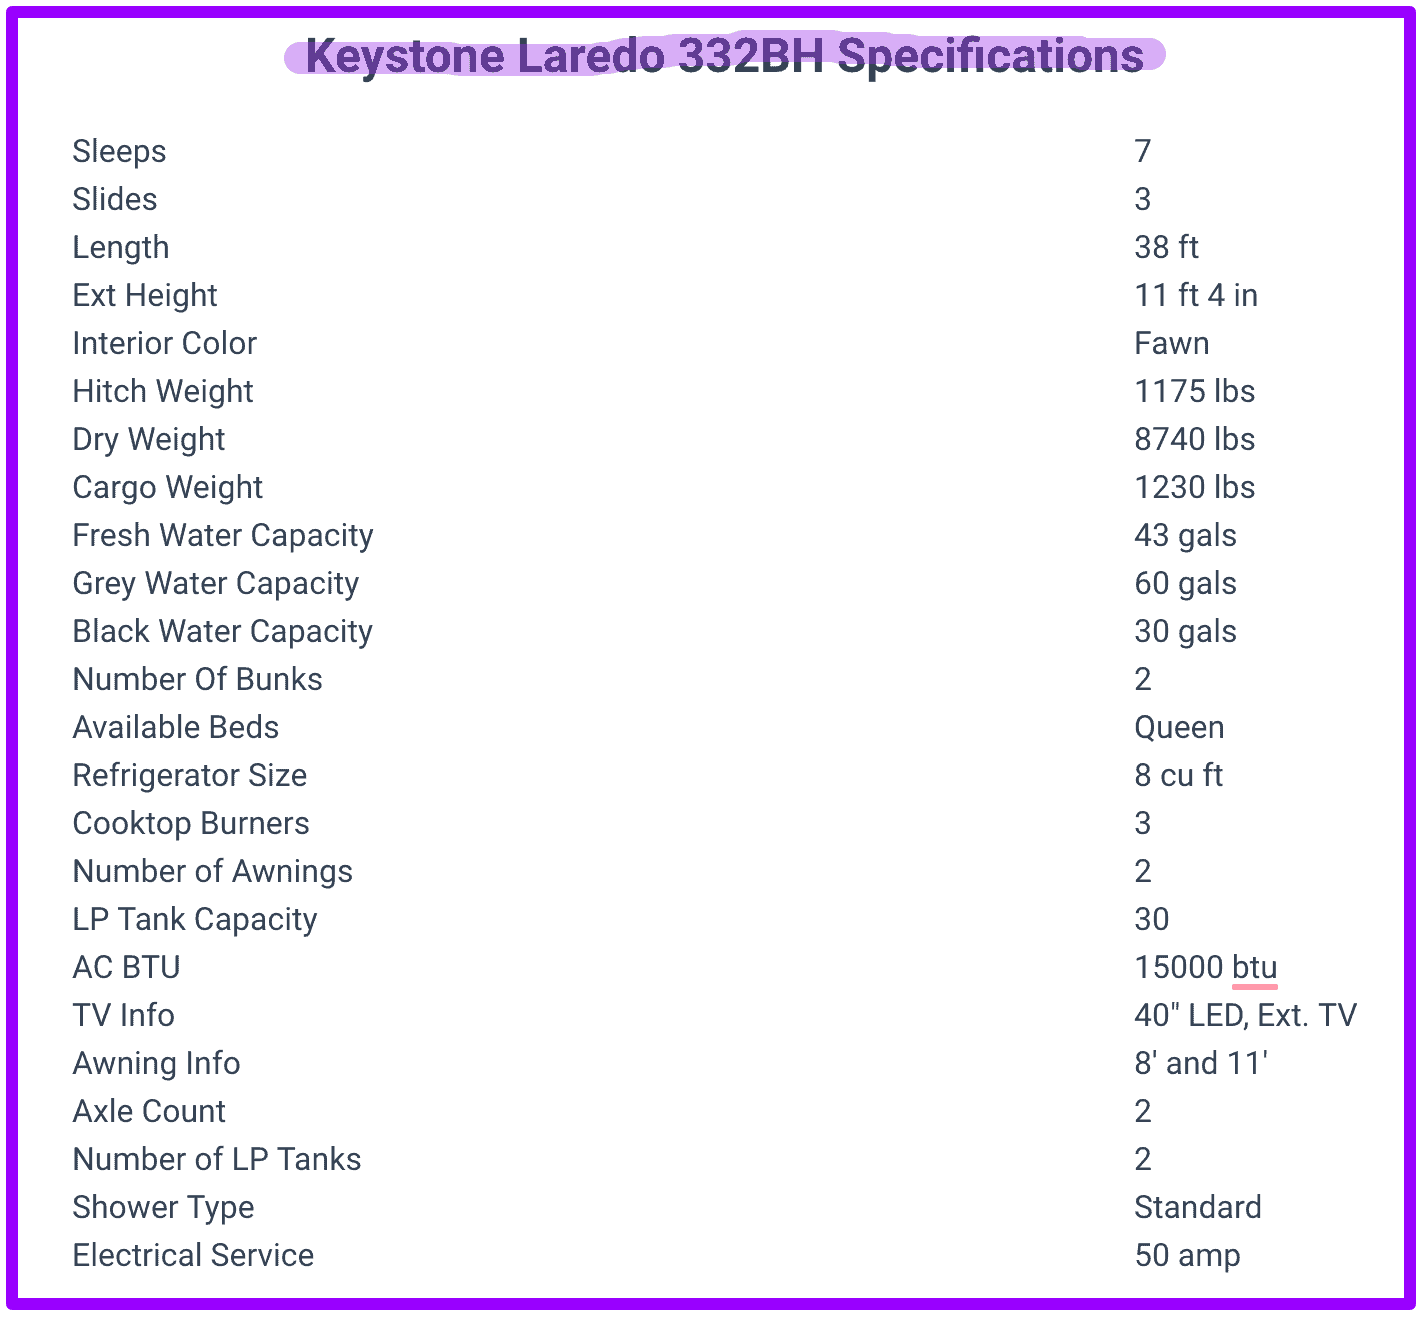 Keystone Laredo 332BH specifications